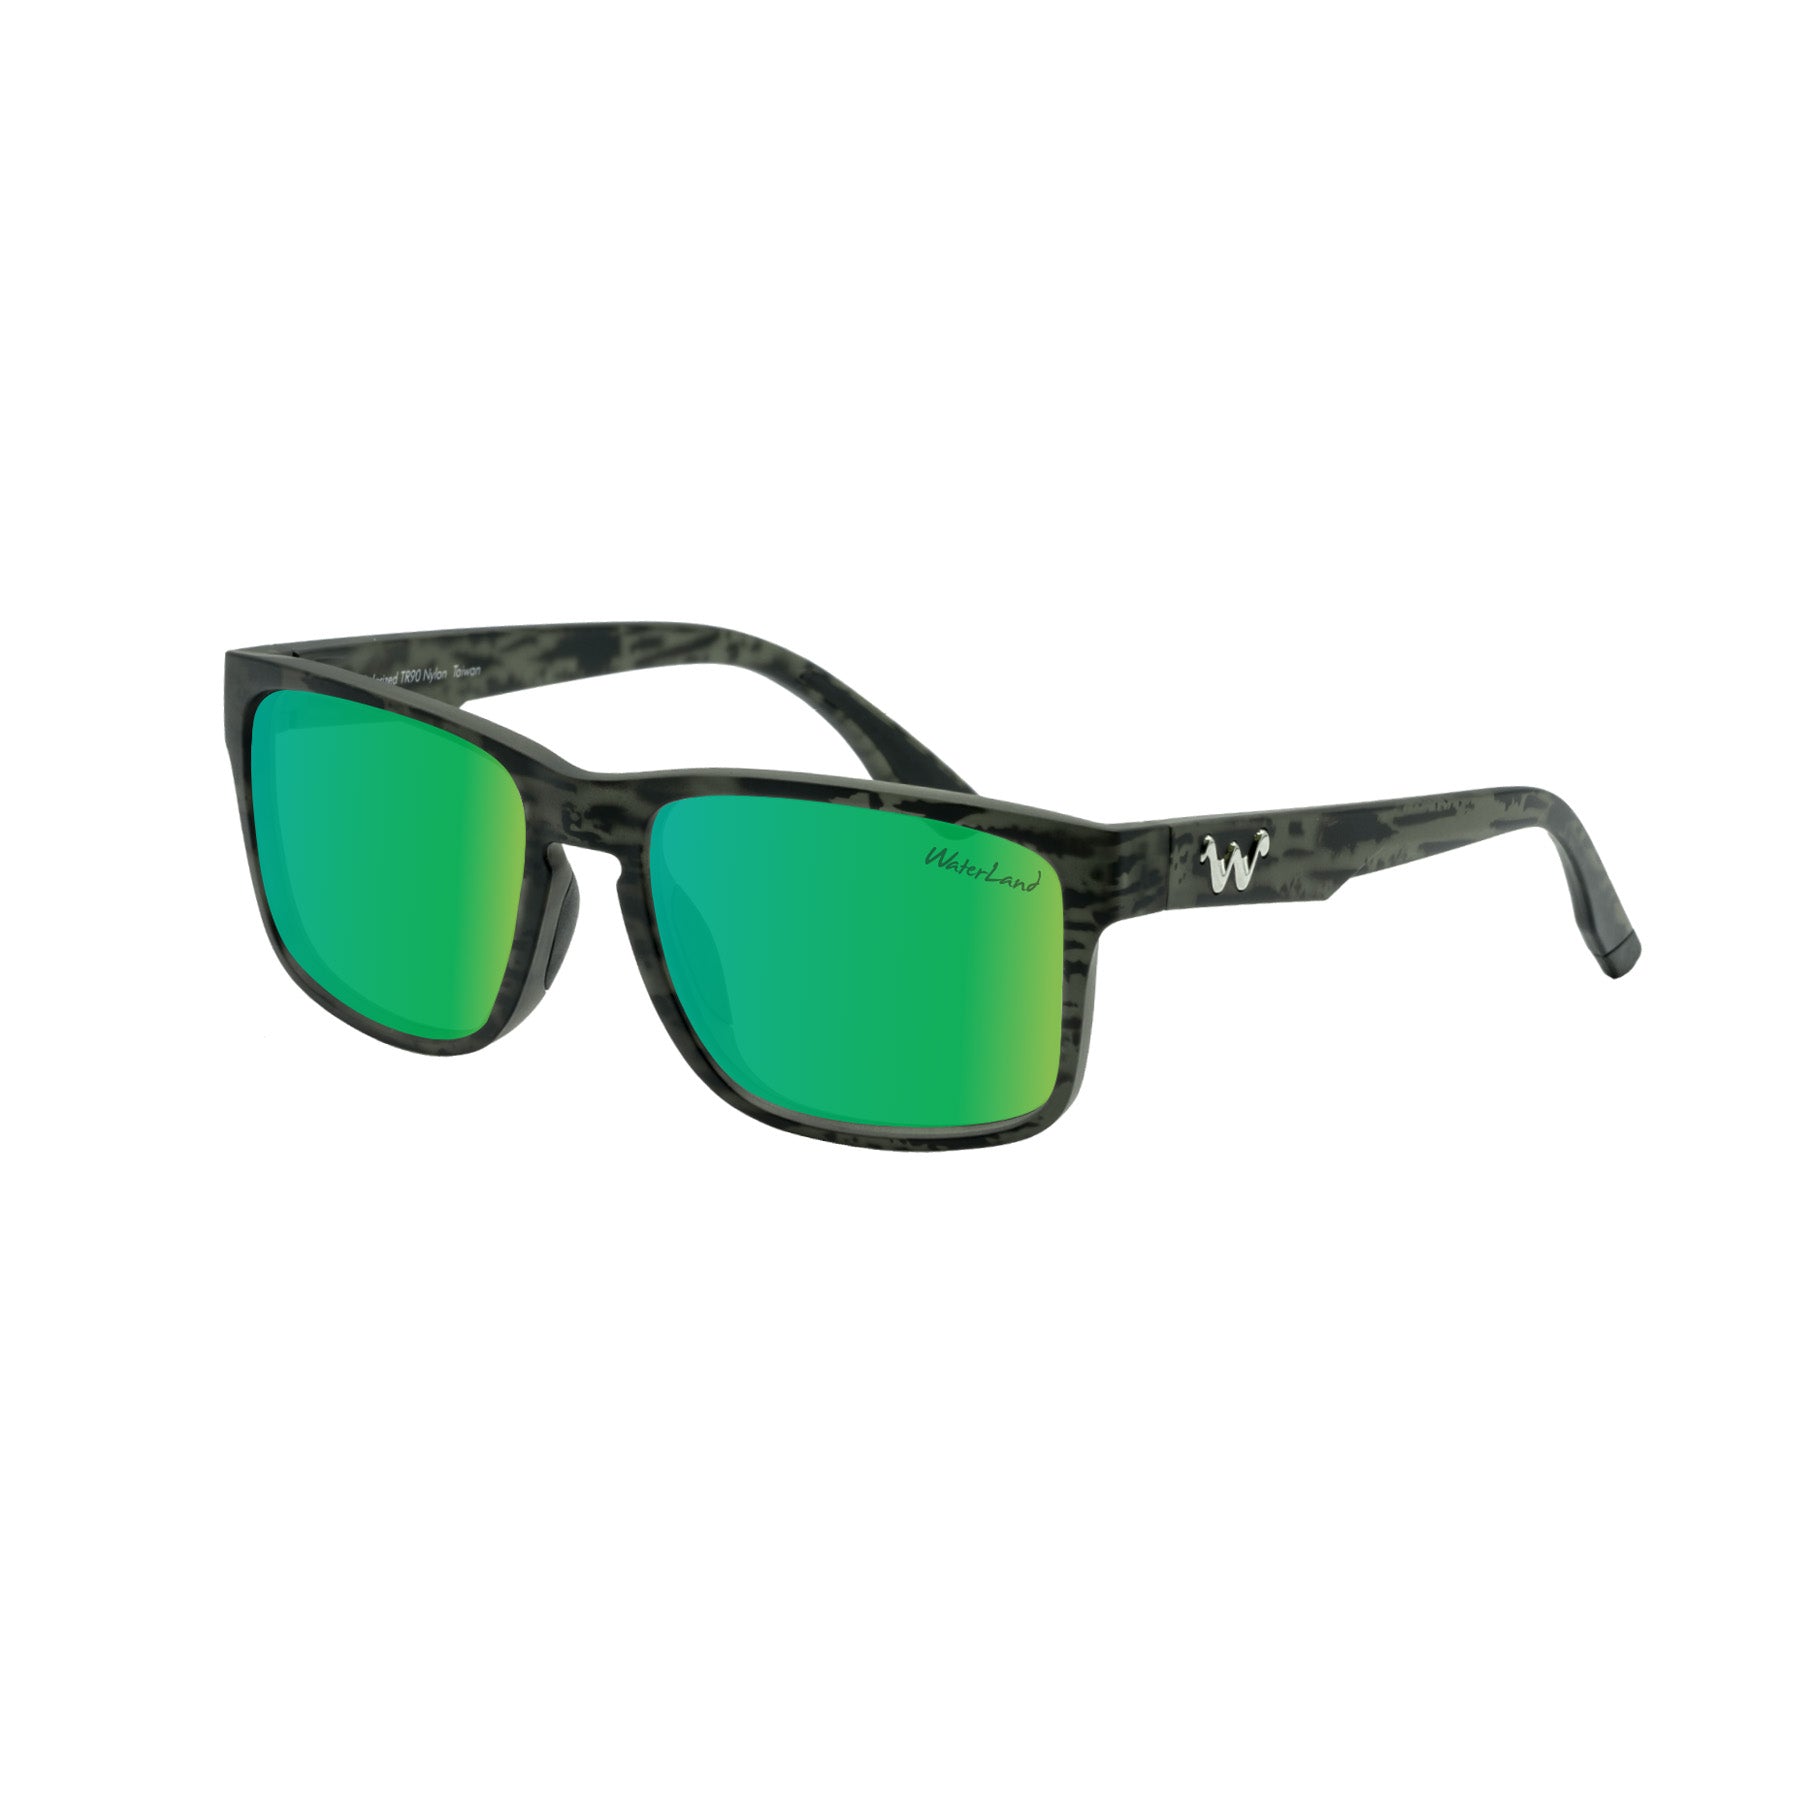 Waterland Sobro Sunglasses Black/Green Mirror